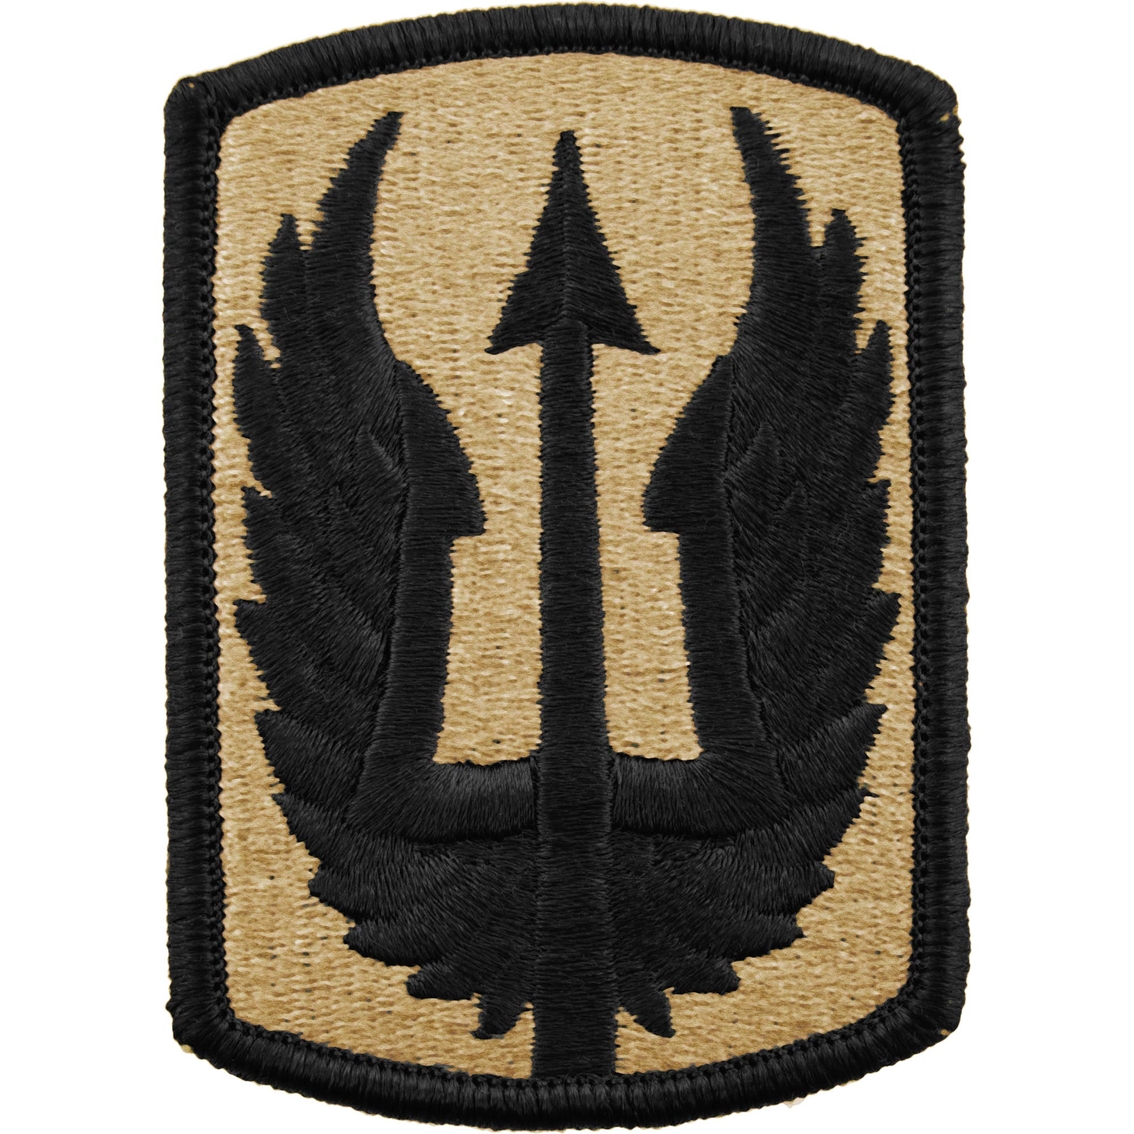 Army Unit Patch 185th Aviation Brigade (ocp) Ocp Unit Patches